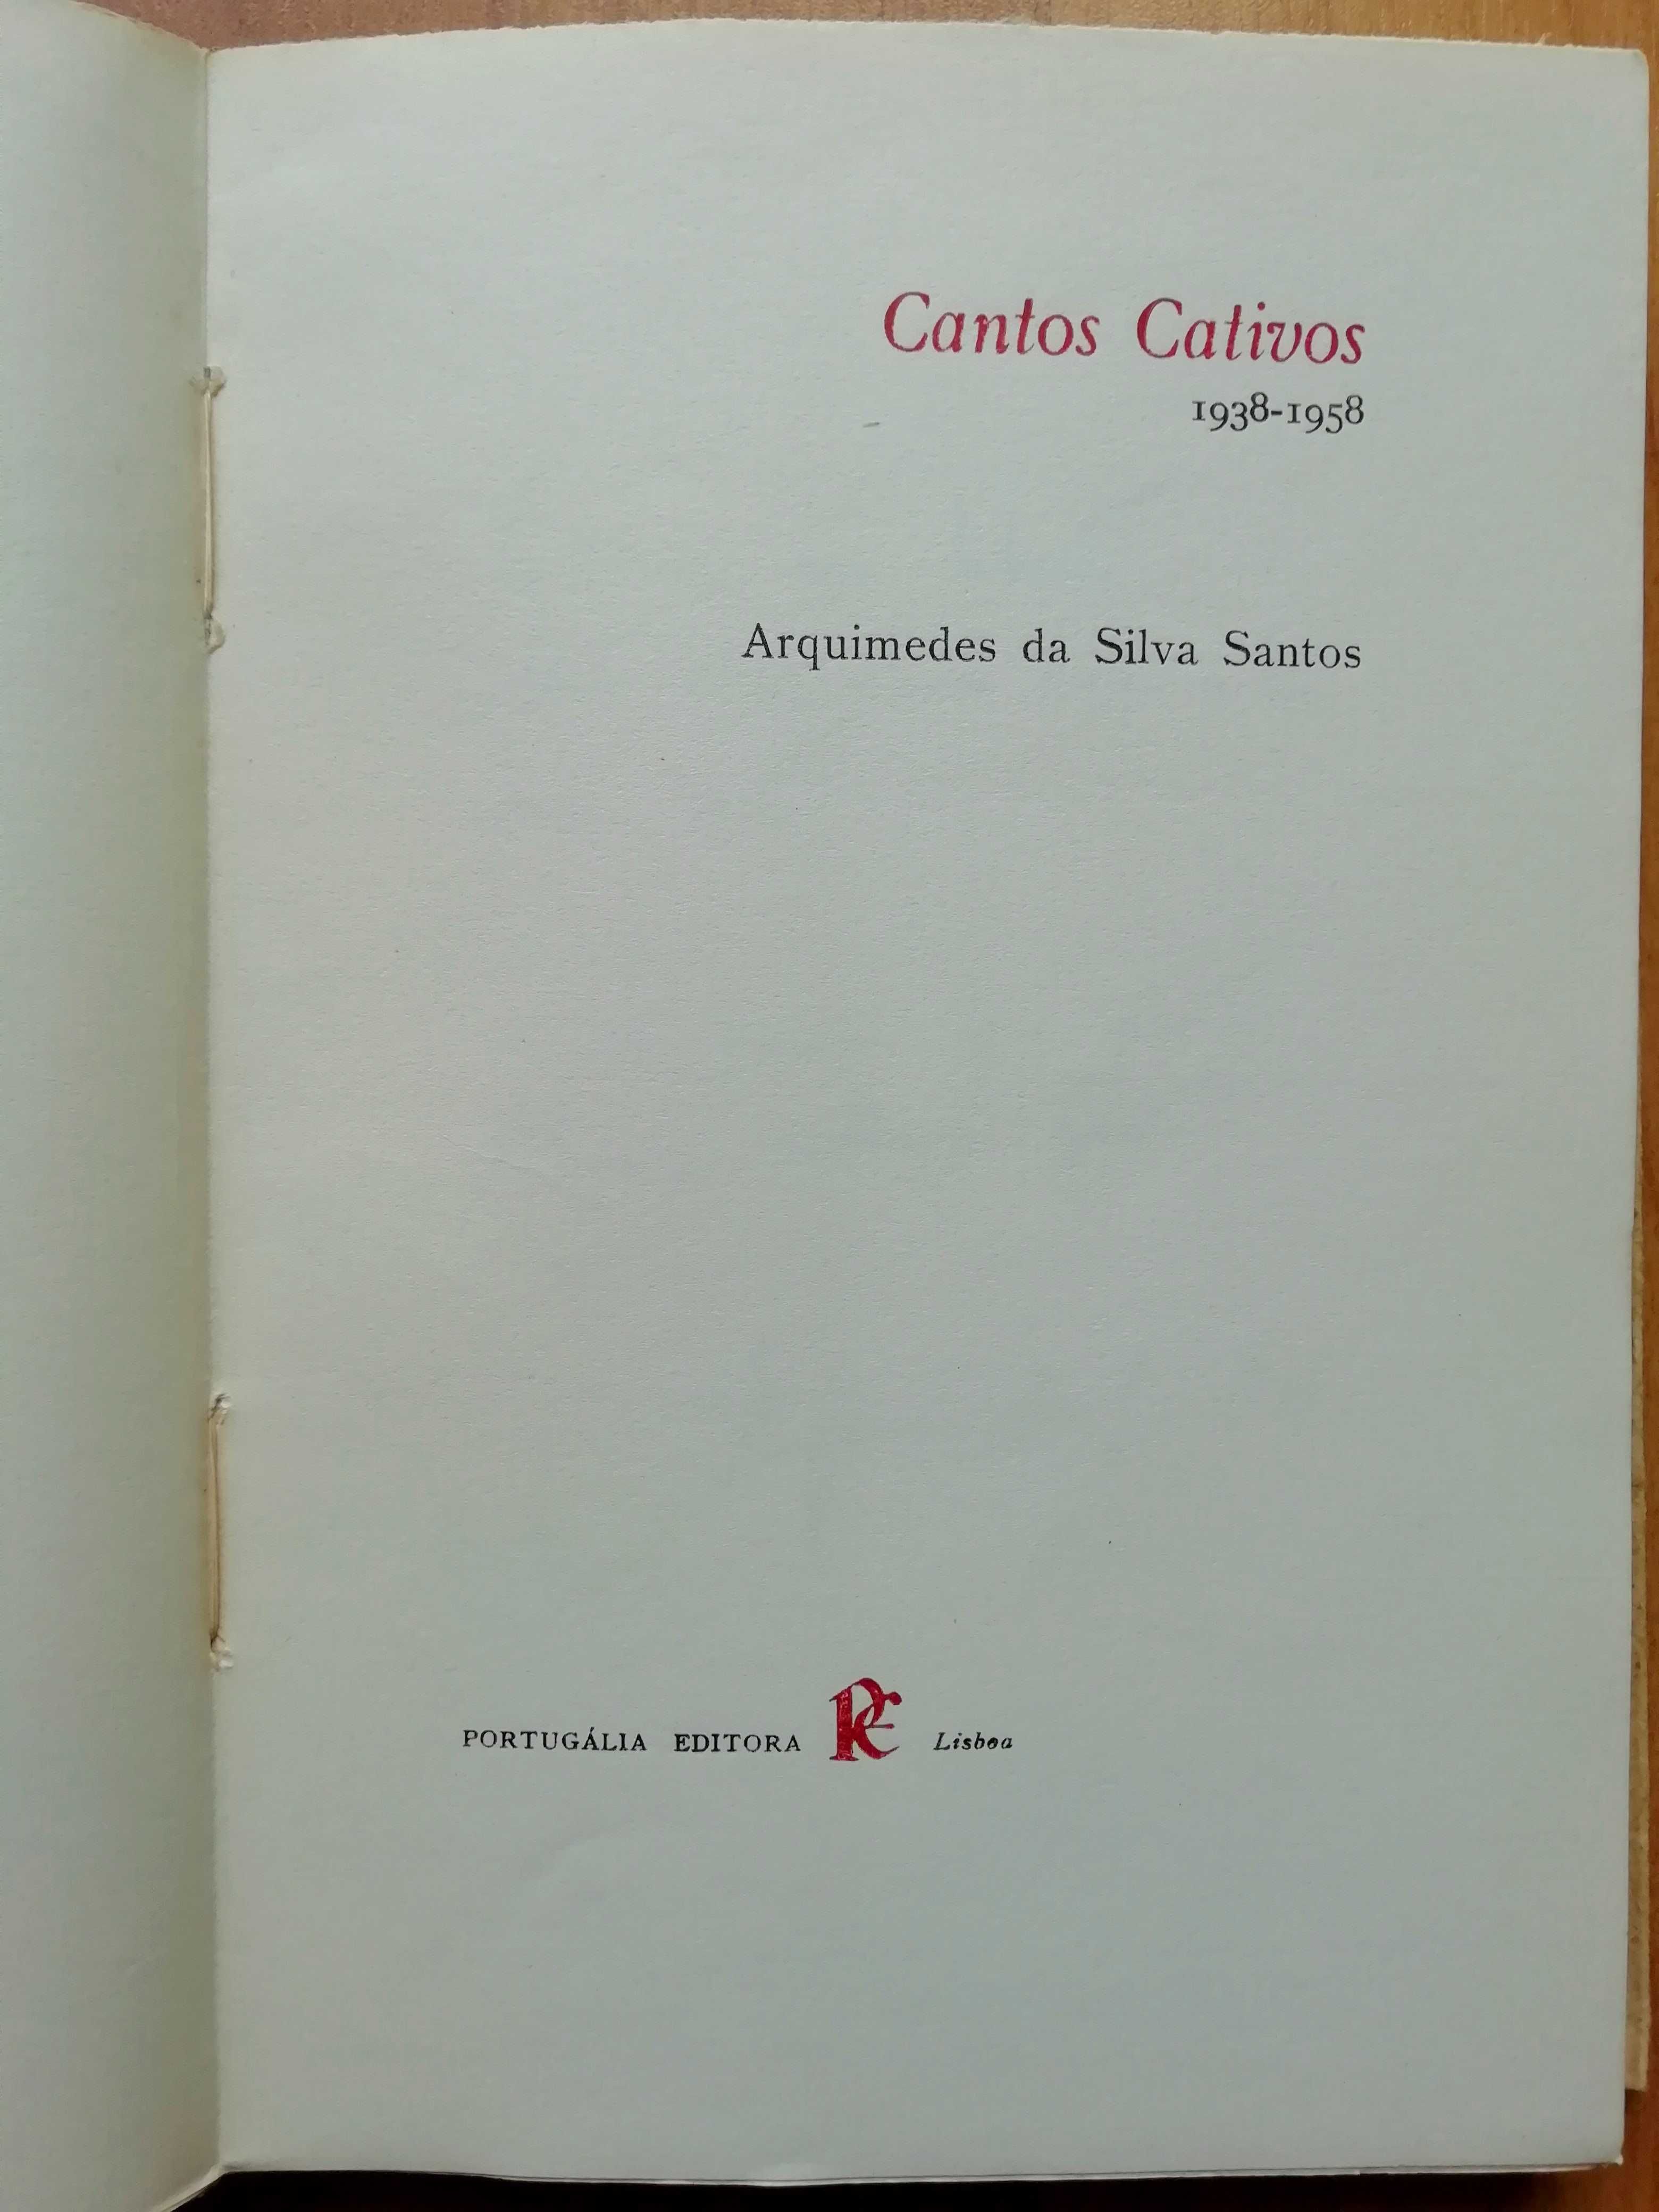 Cantos Cativos - Arquimedes da Silva Santos